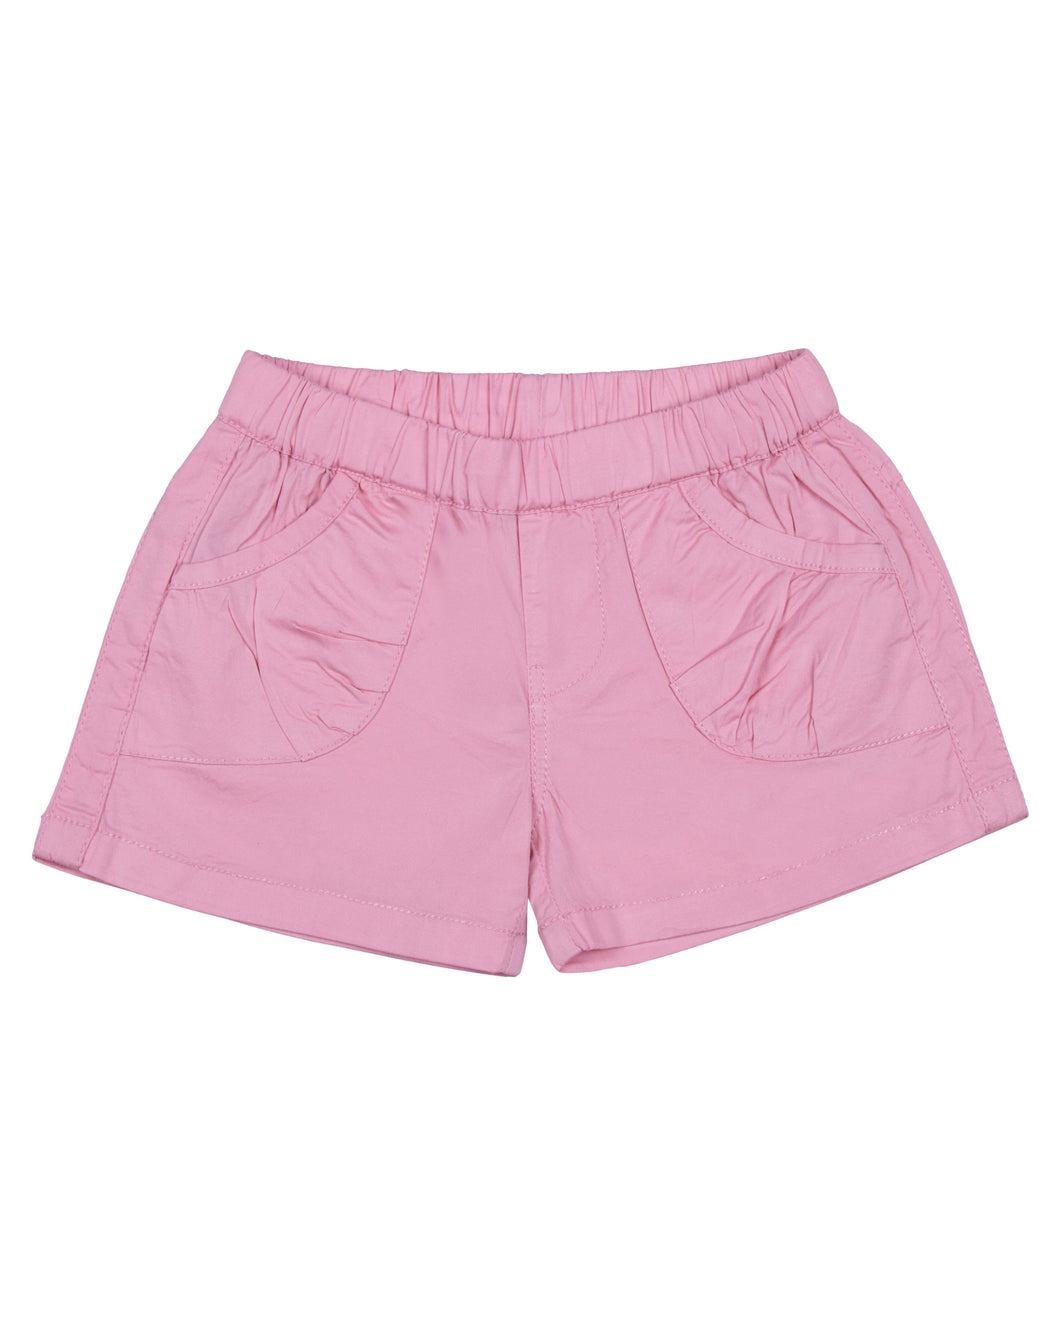 Girls Solid Plain Cotton Pink Shorts